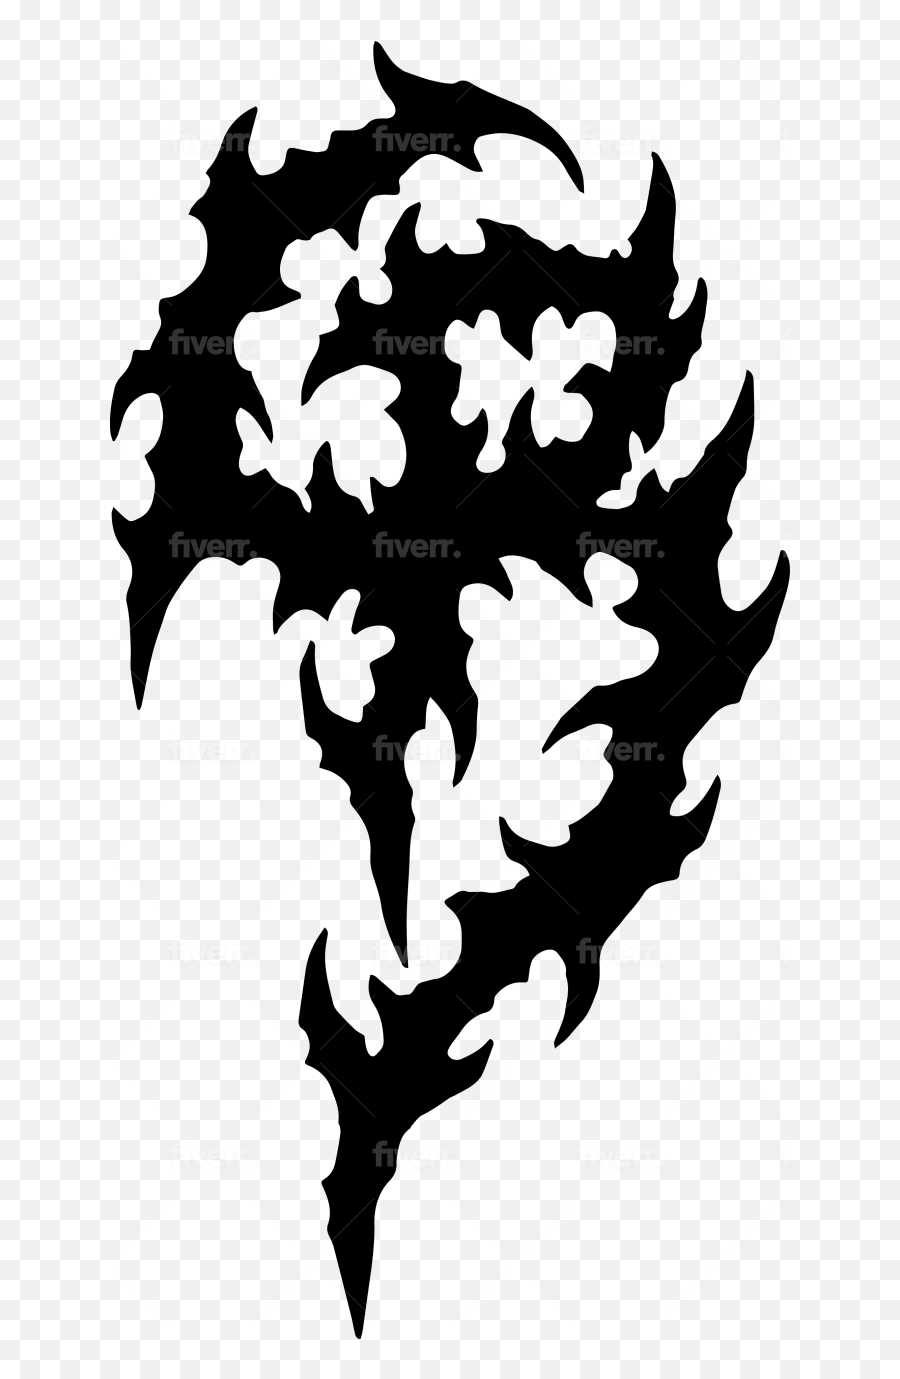 Design A Metal Band Logo Emoji,Fiver Logo